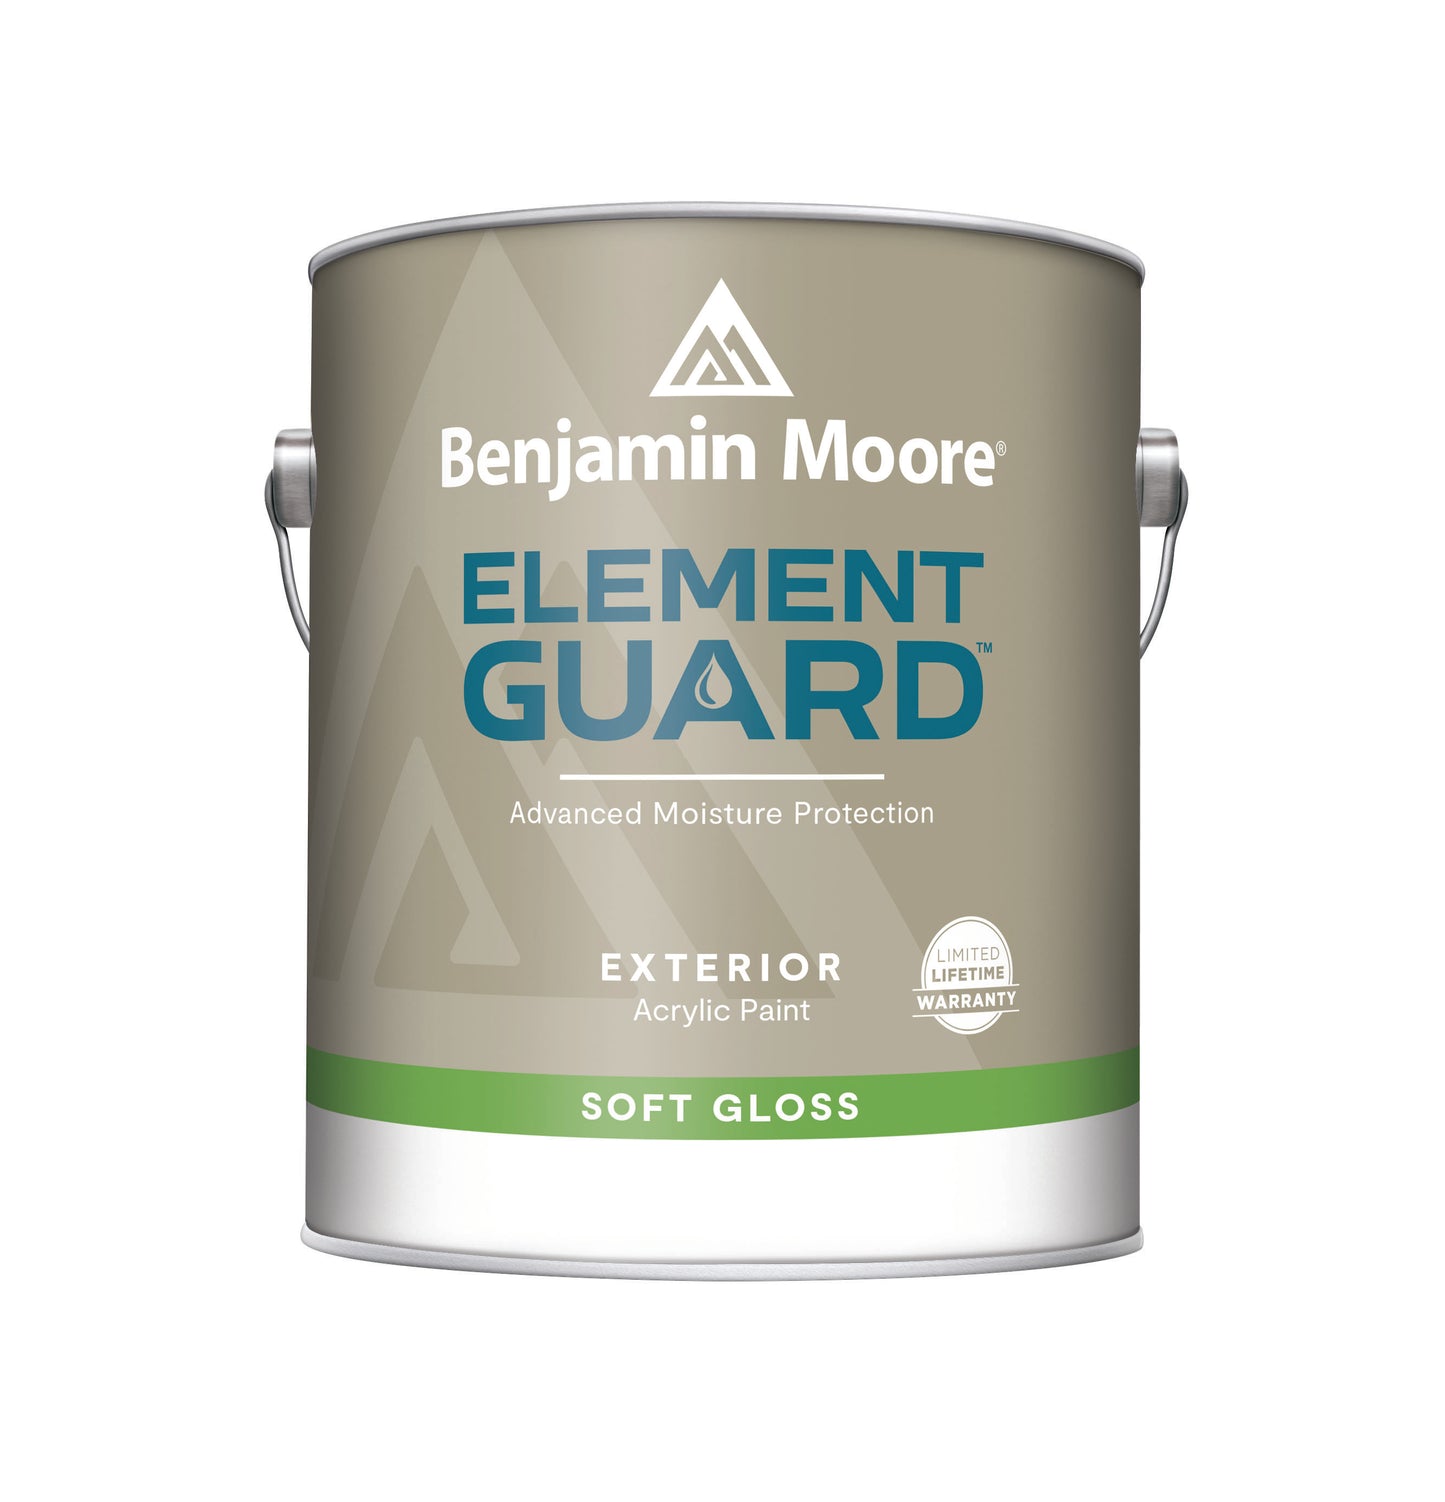 Element Guard Exterior Acrylic Soft Gloss Paint K765